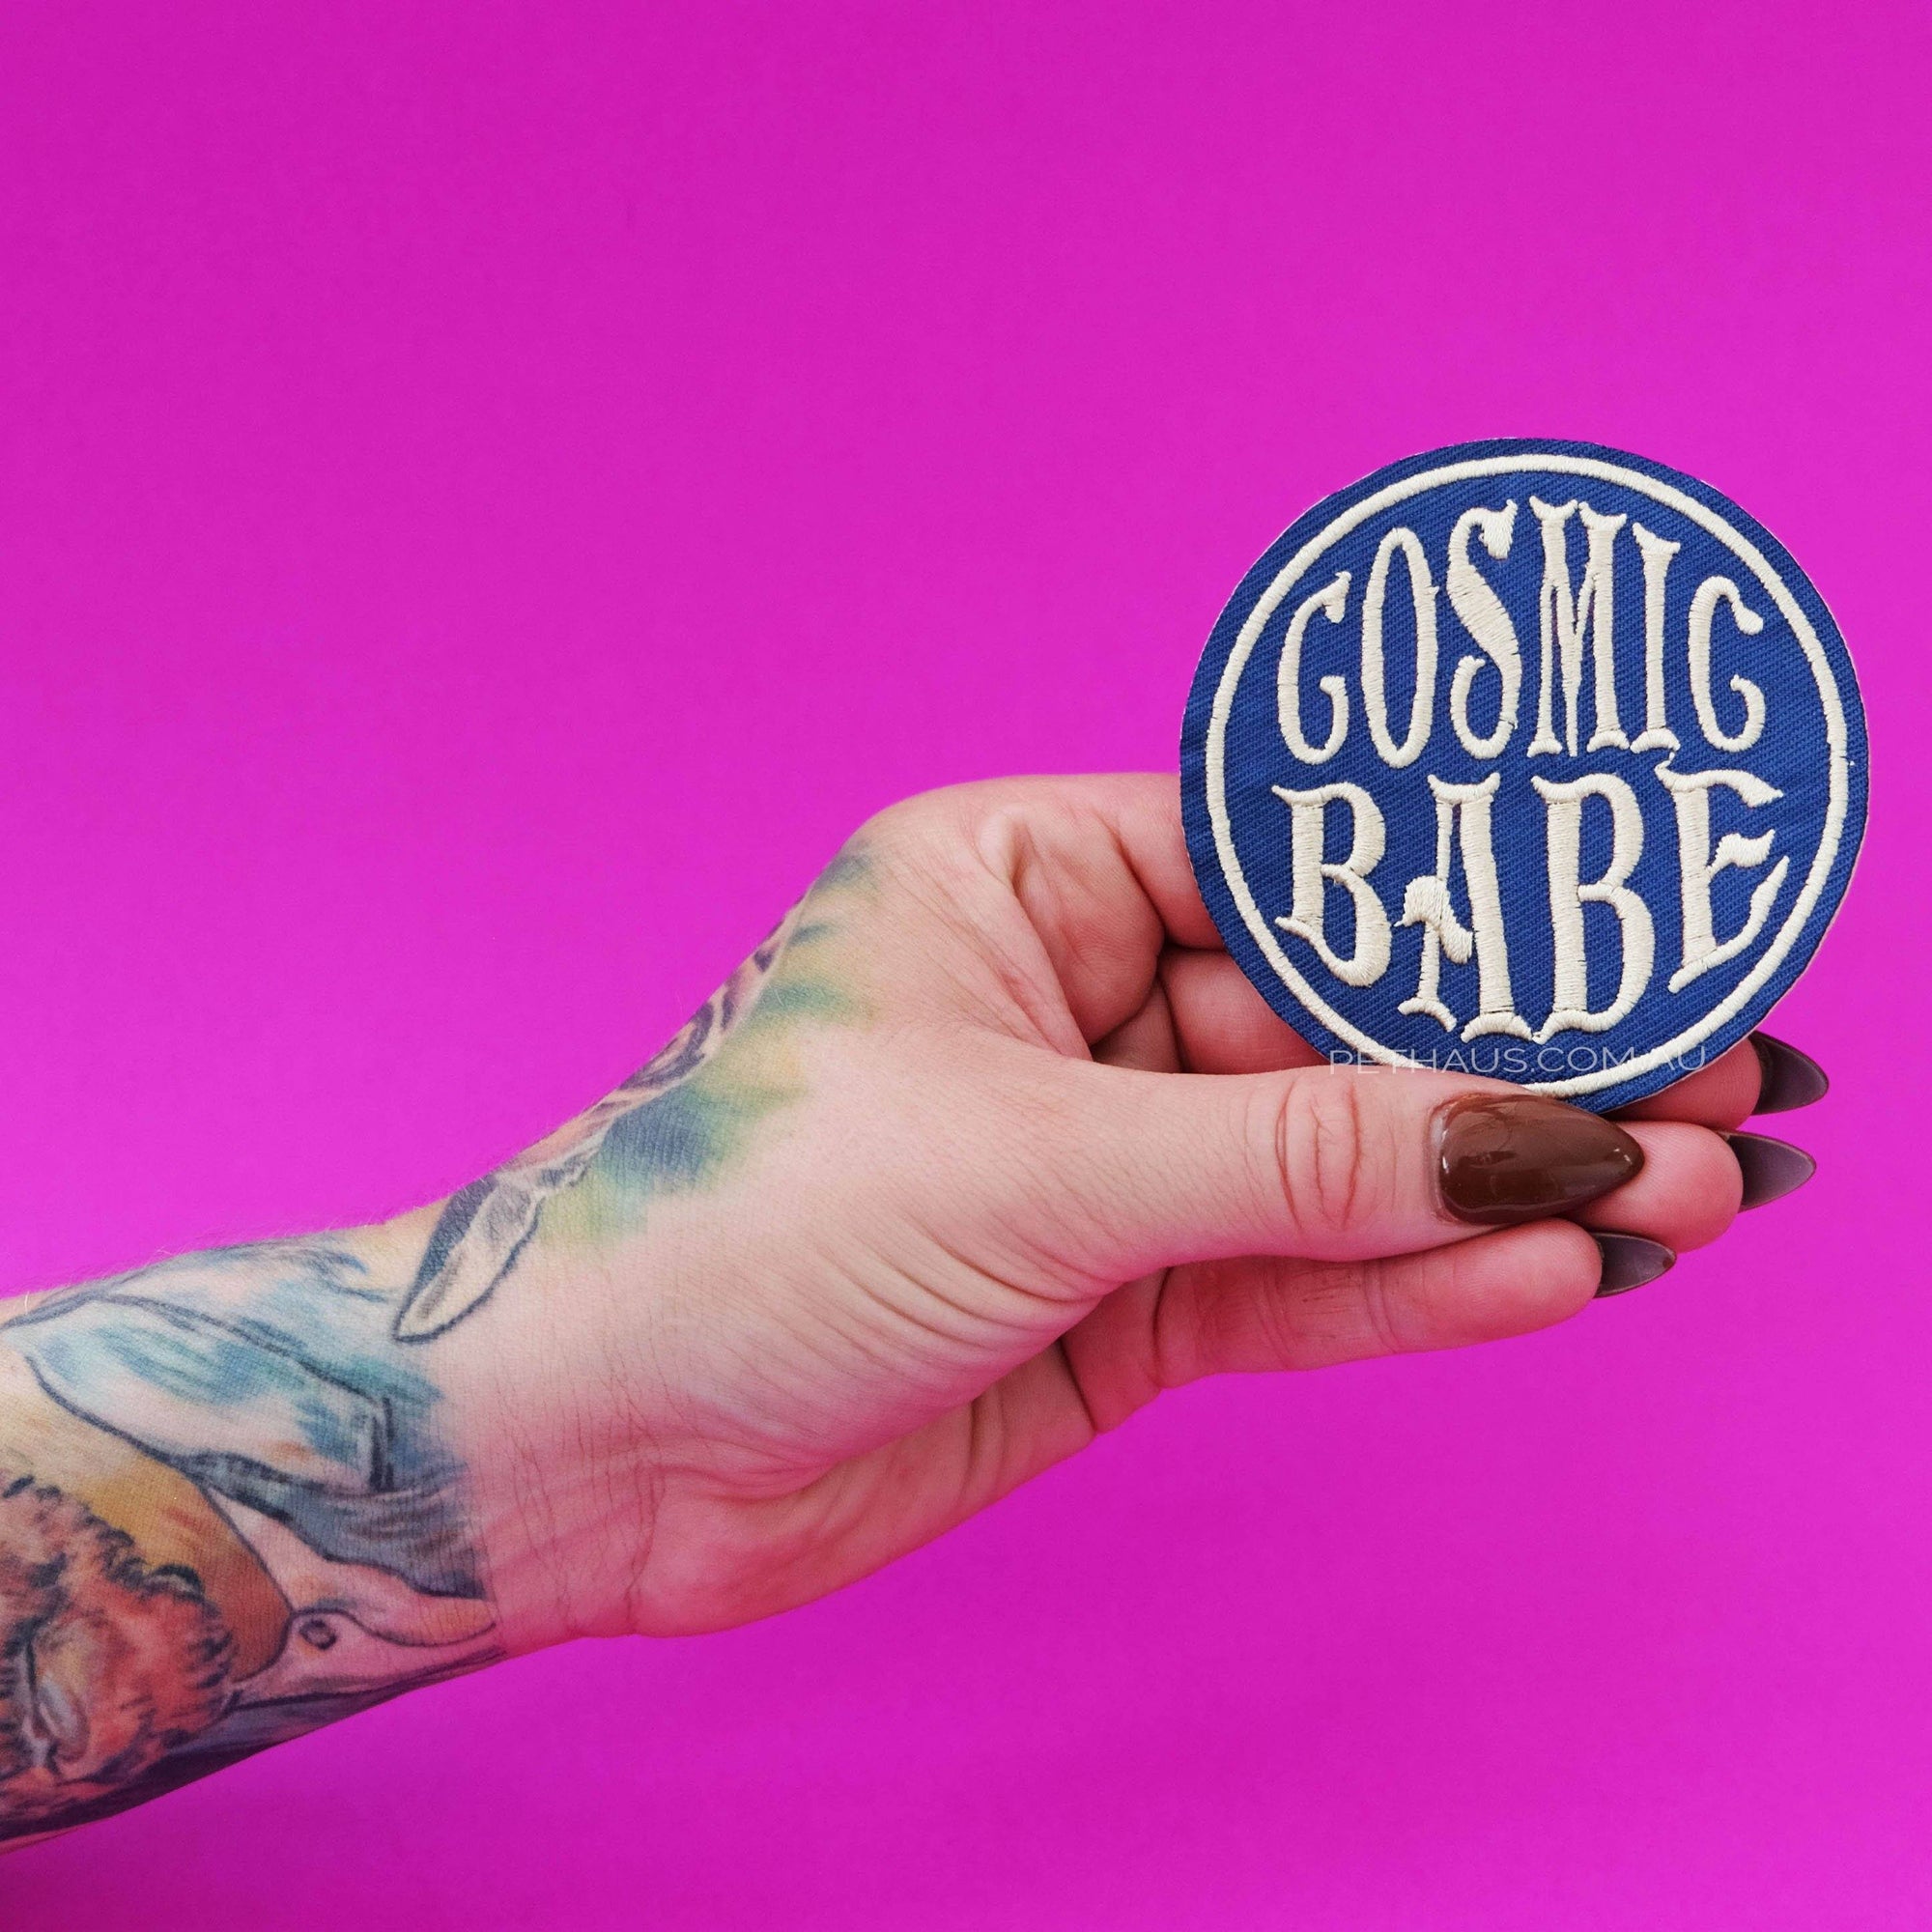 Cosmic babe patch, hippy patch, vintage patch, feminist patch